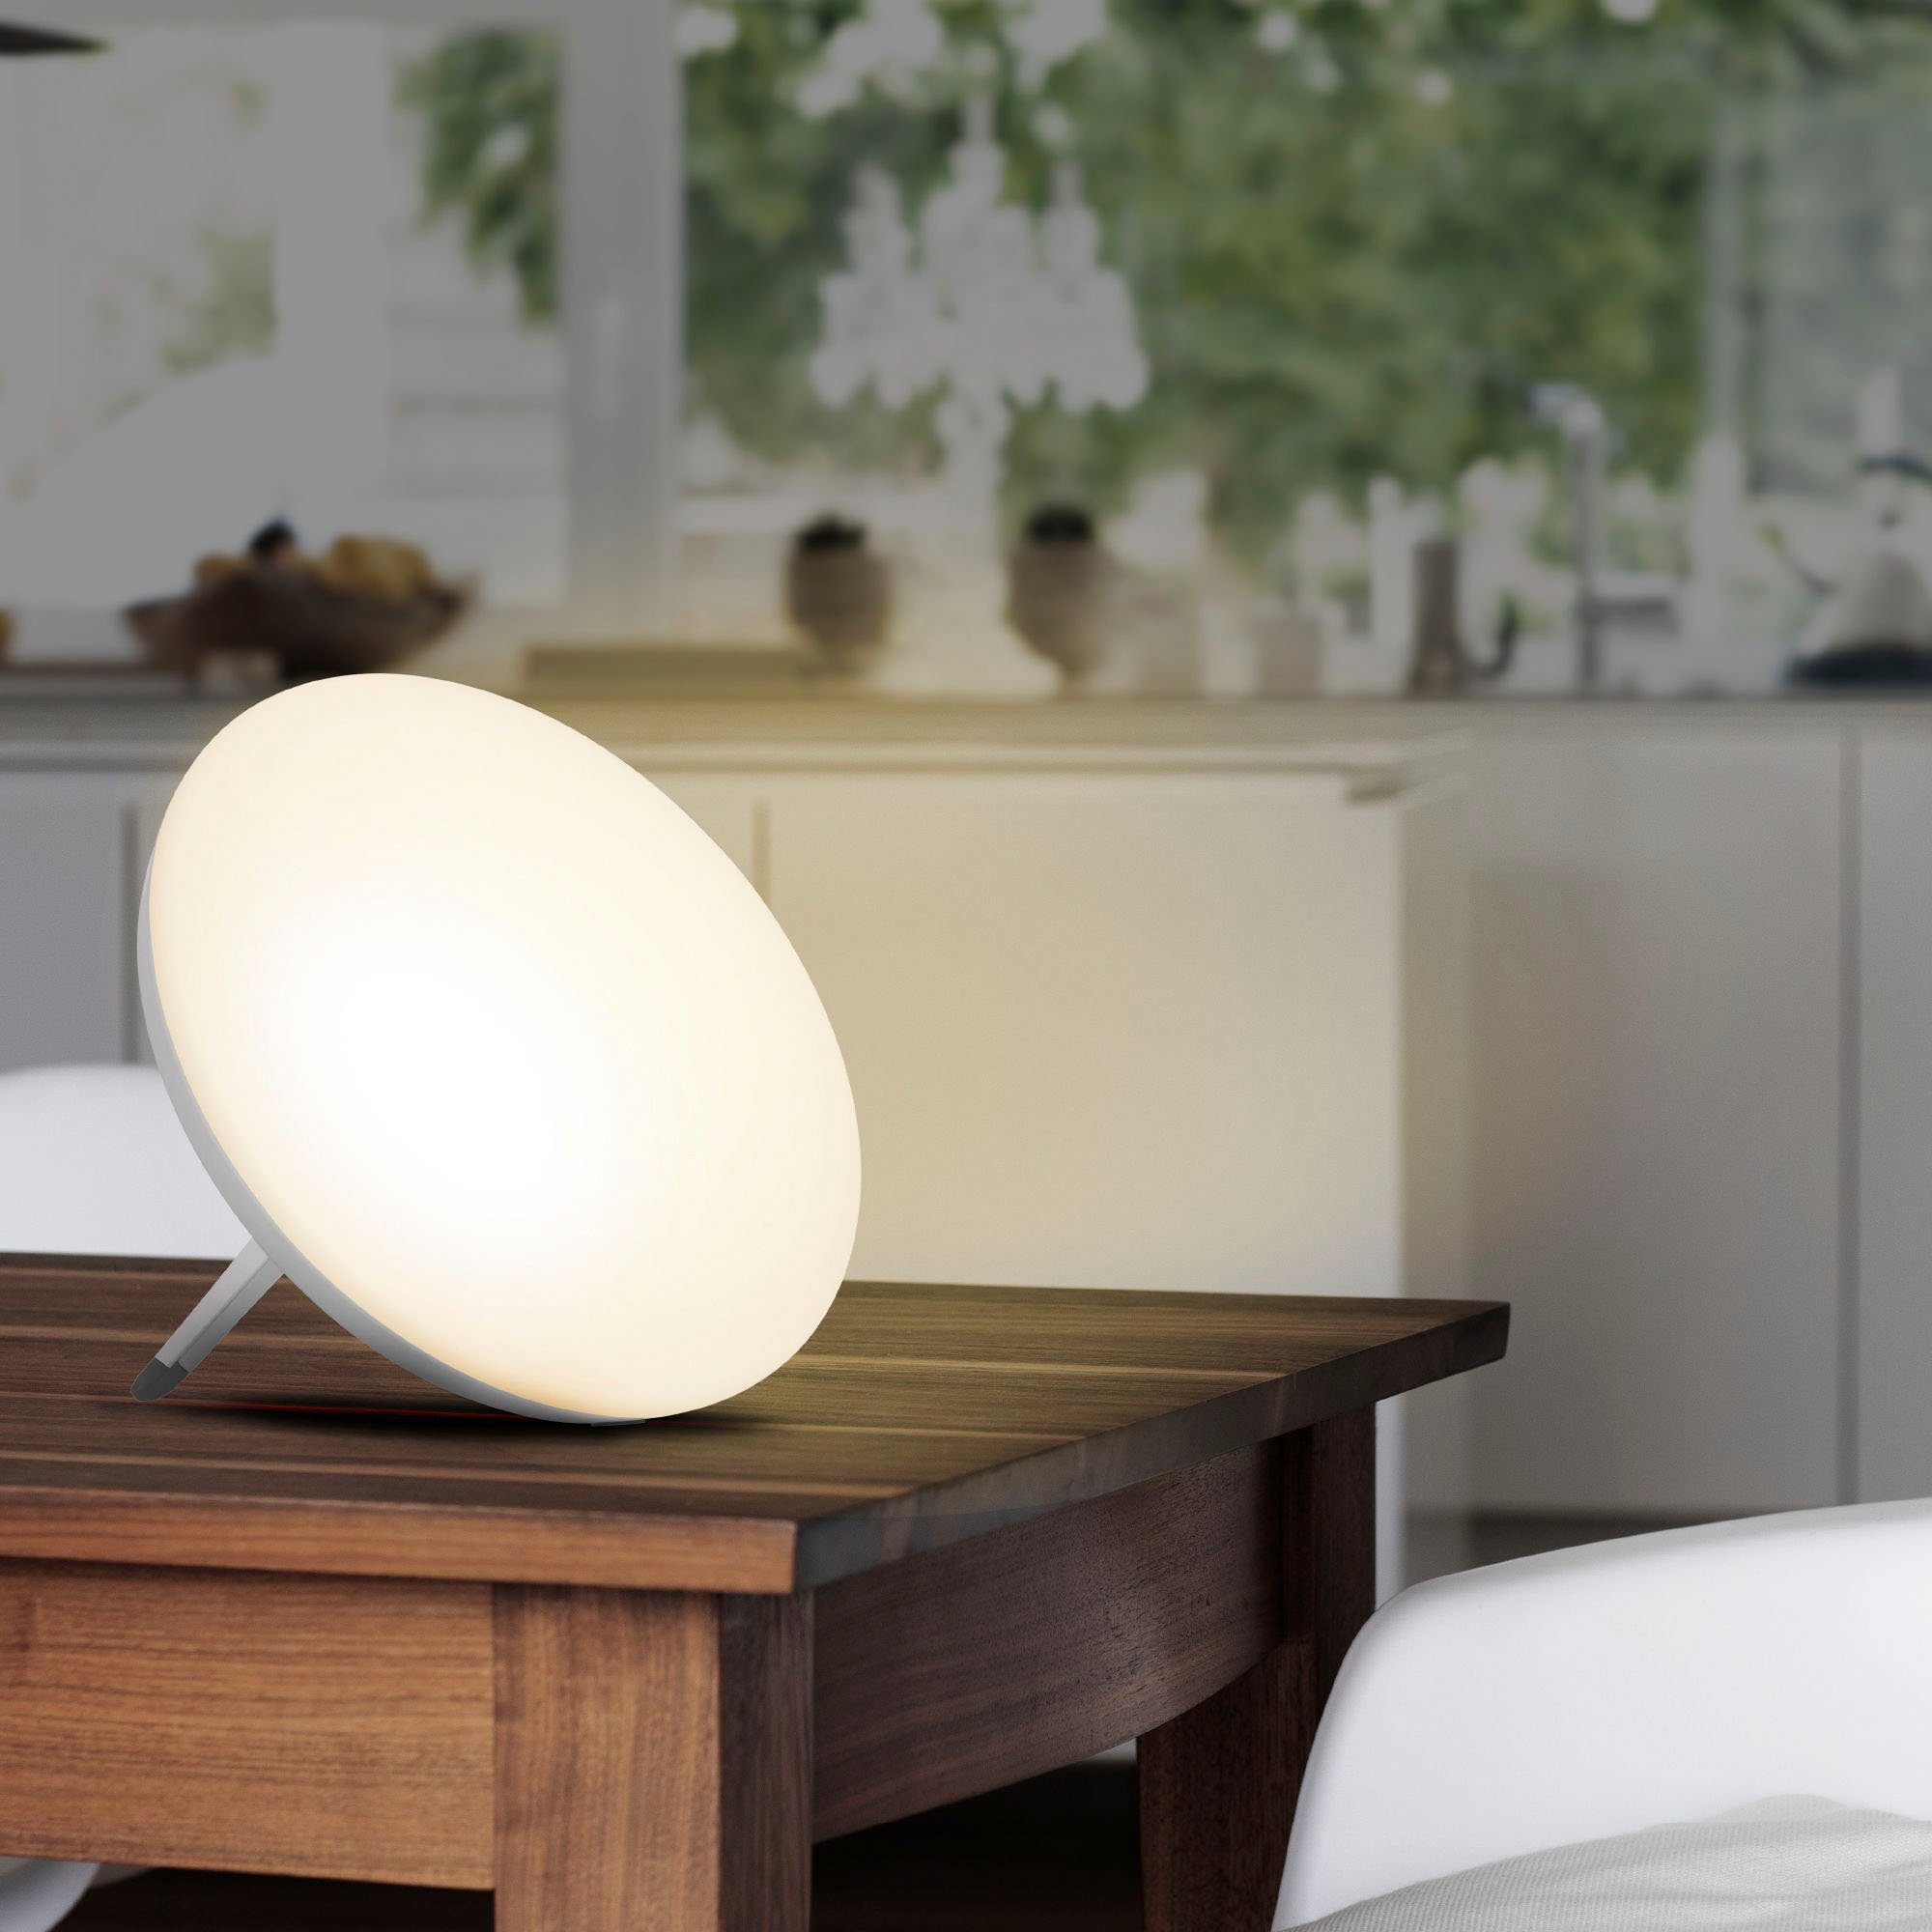 Medisana Tageslichtlampe LT500, Farbwechsel, LED integriert, fest Warmweiß